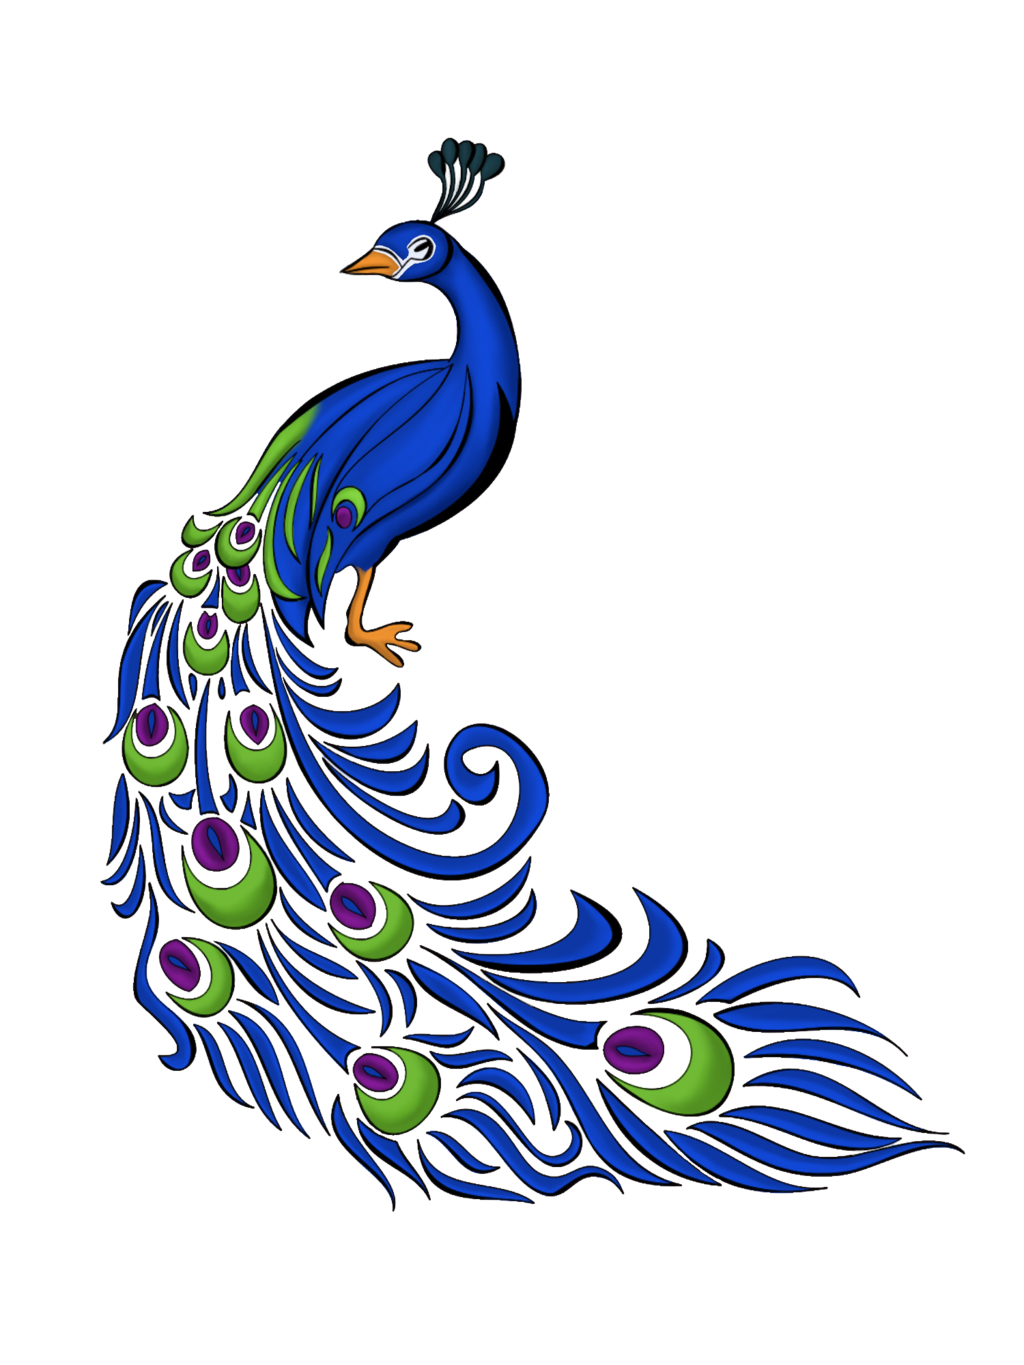 Peacock Vector Art Clipart Best